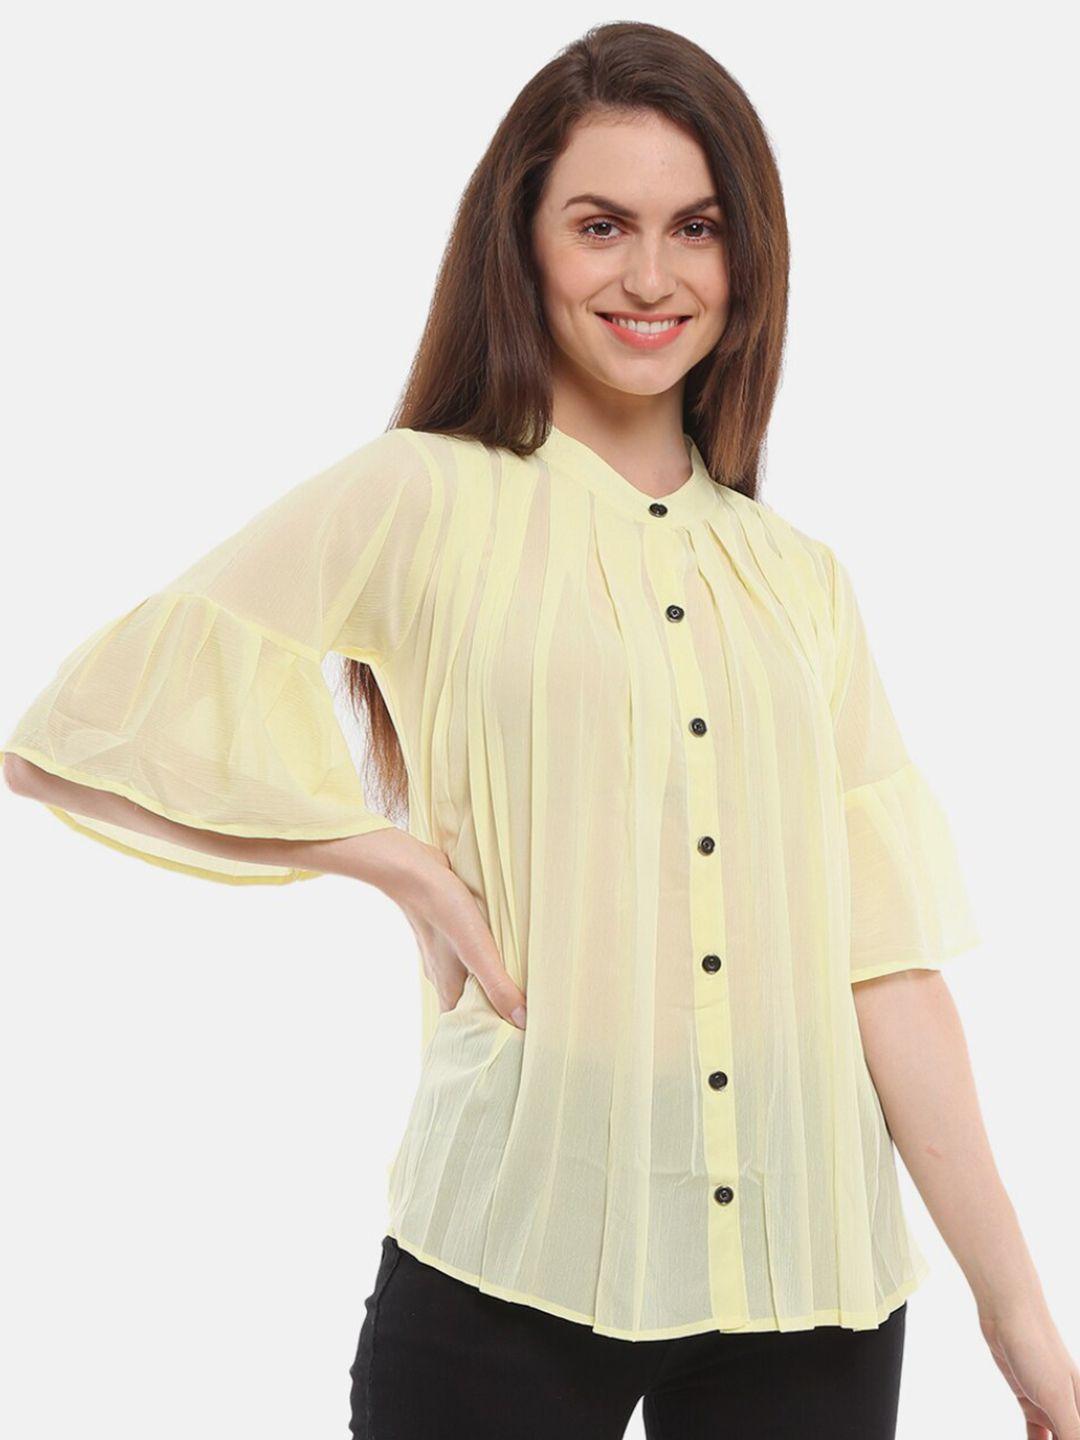 v-mart women western solid yellow mandarin collar shirt style top